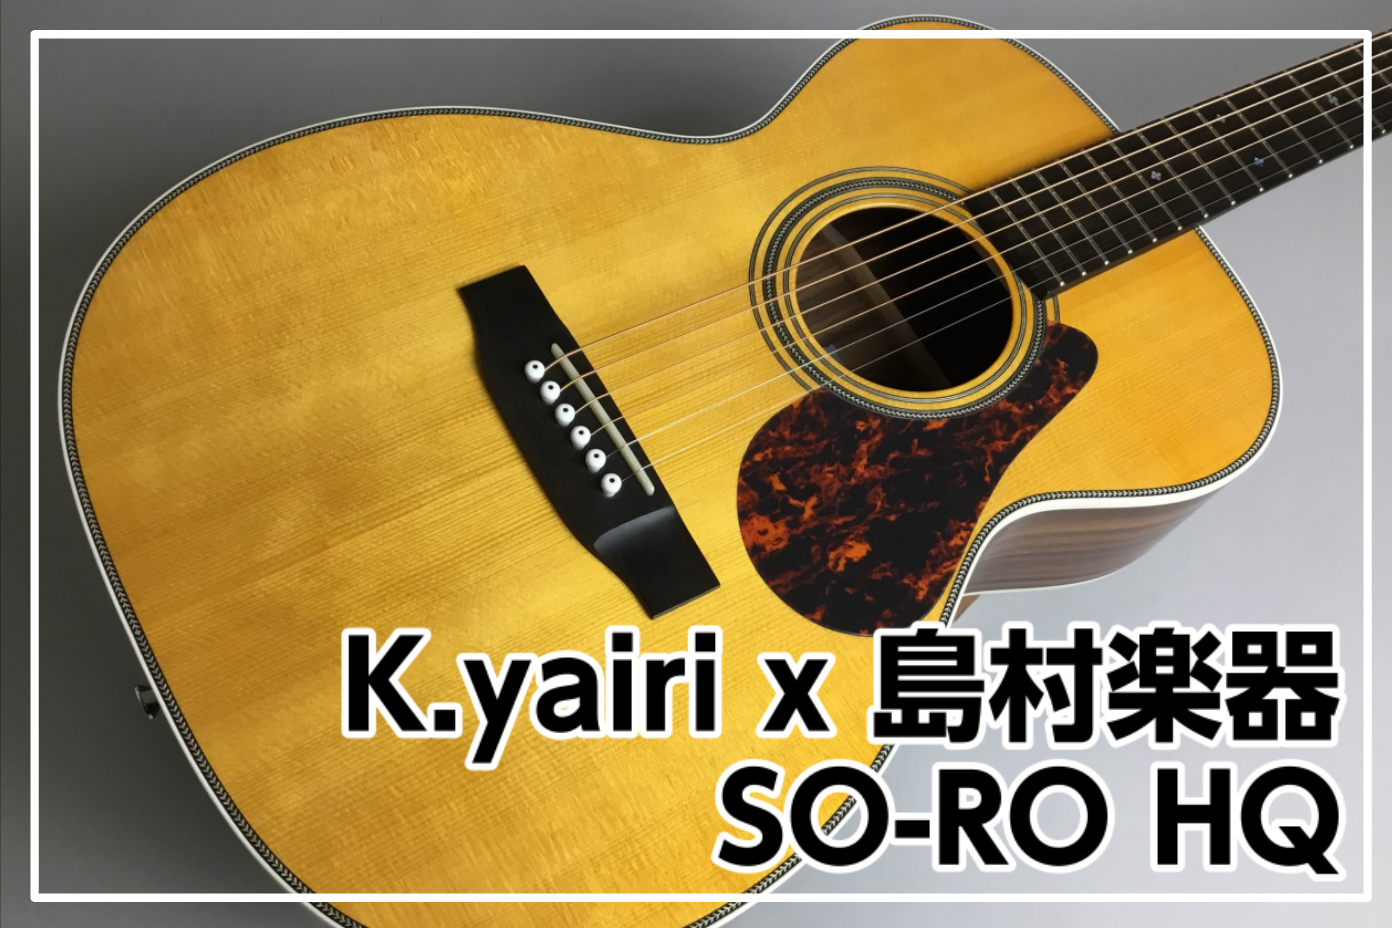 K.yairi SO-RO HQ 島村楽器コラボレーションモデル入荷のご案内